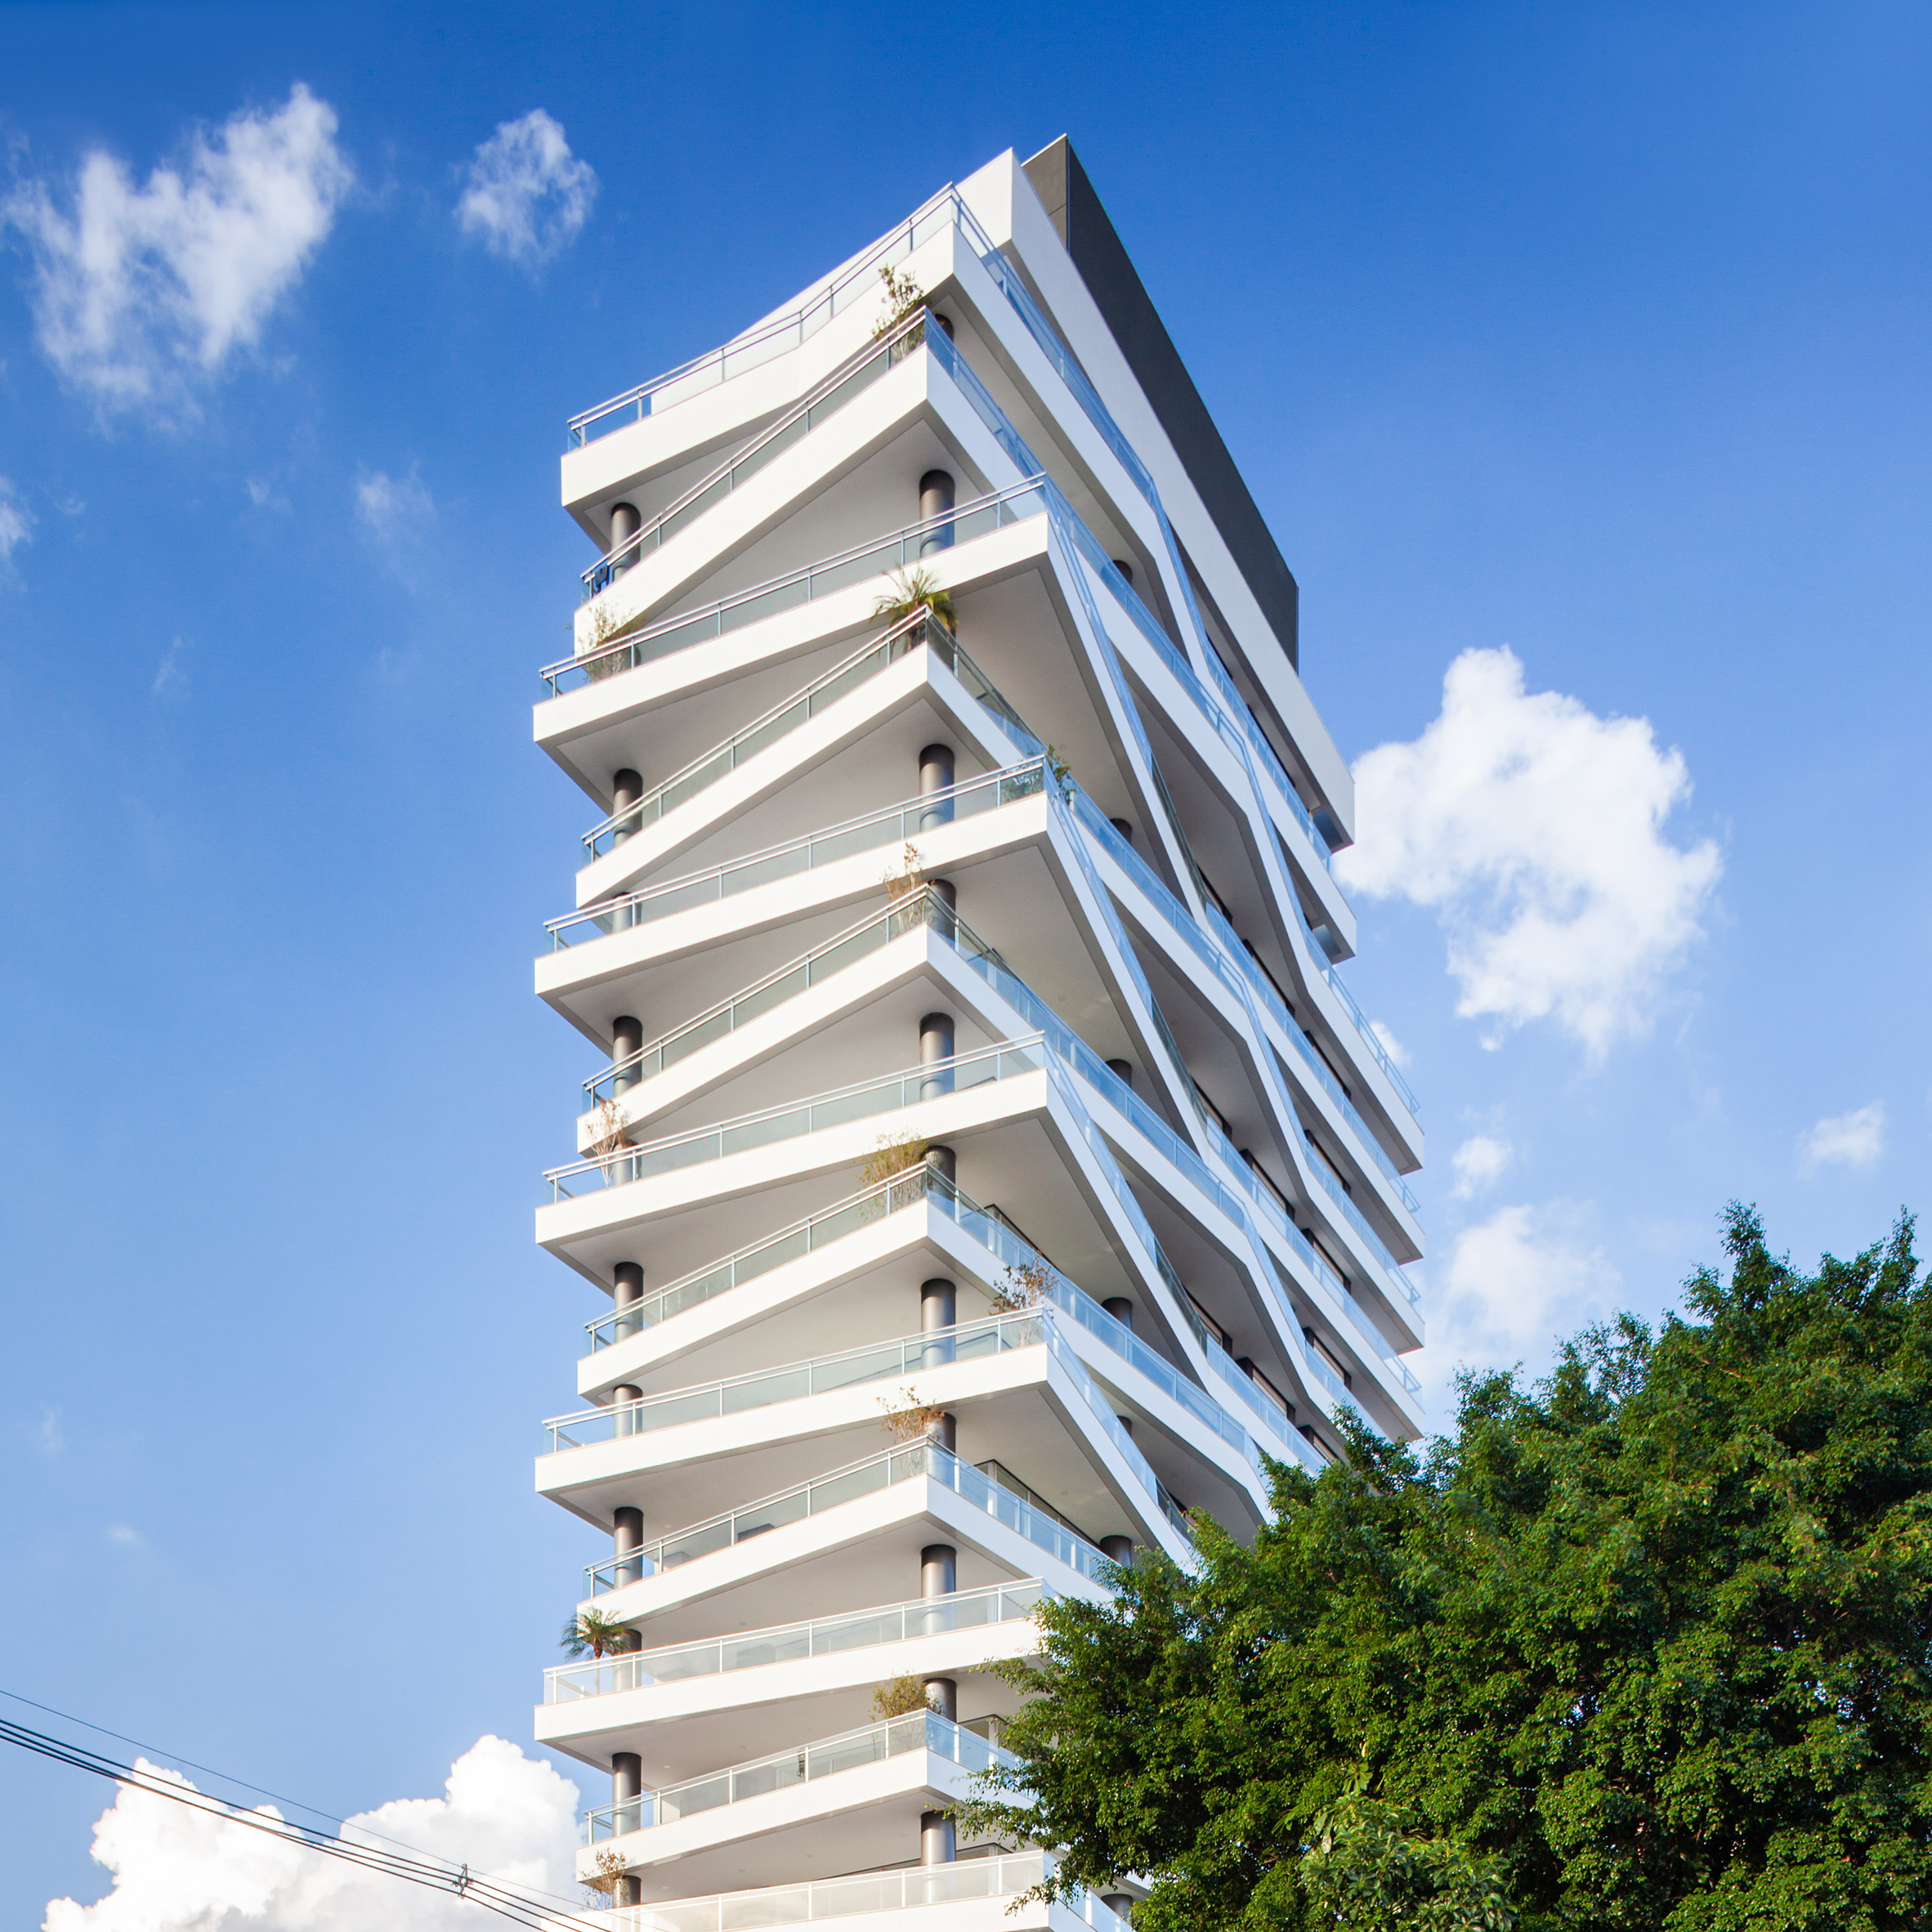 ten buildings that make a sculptural feature of their balconies